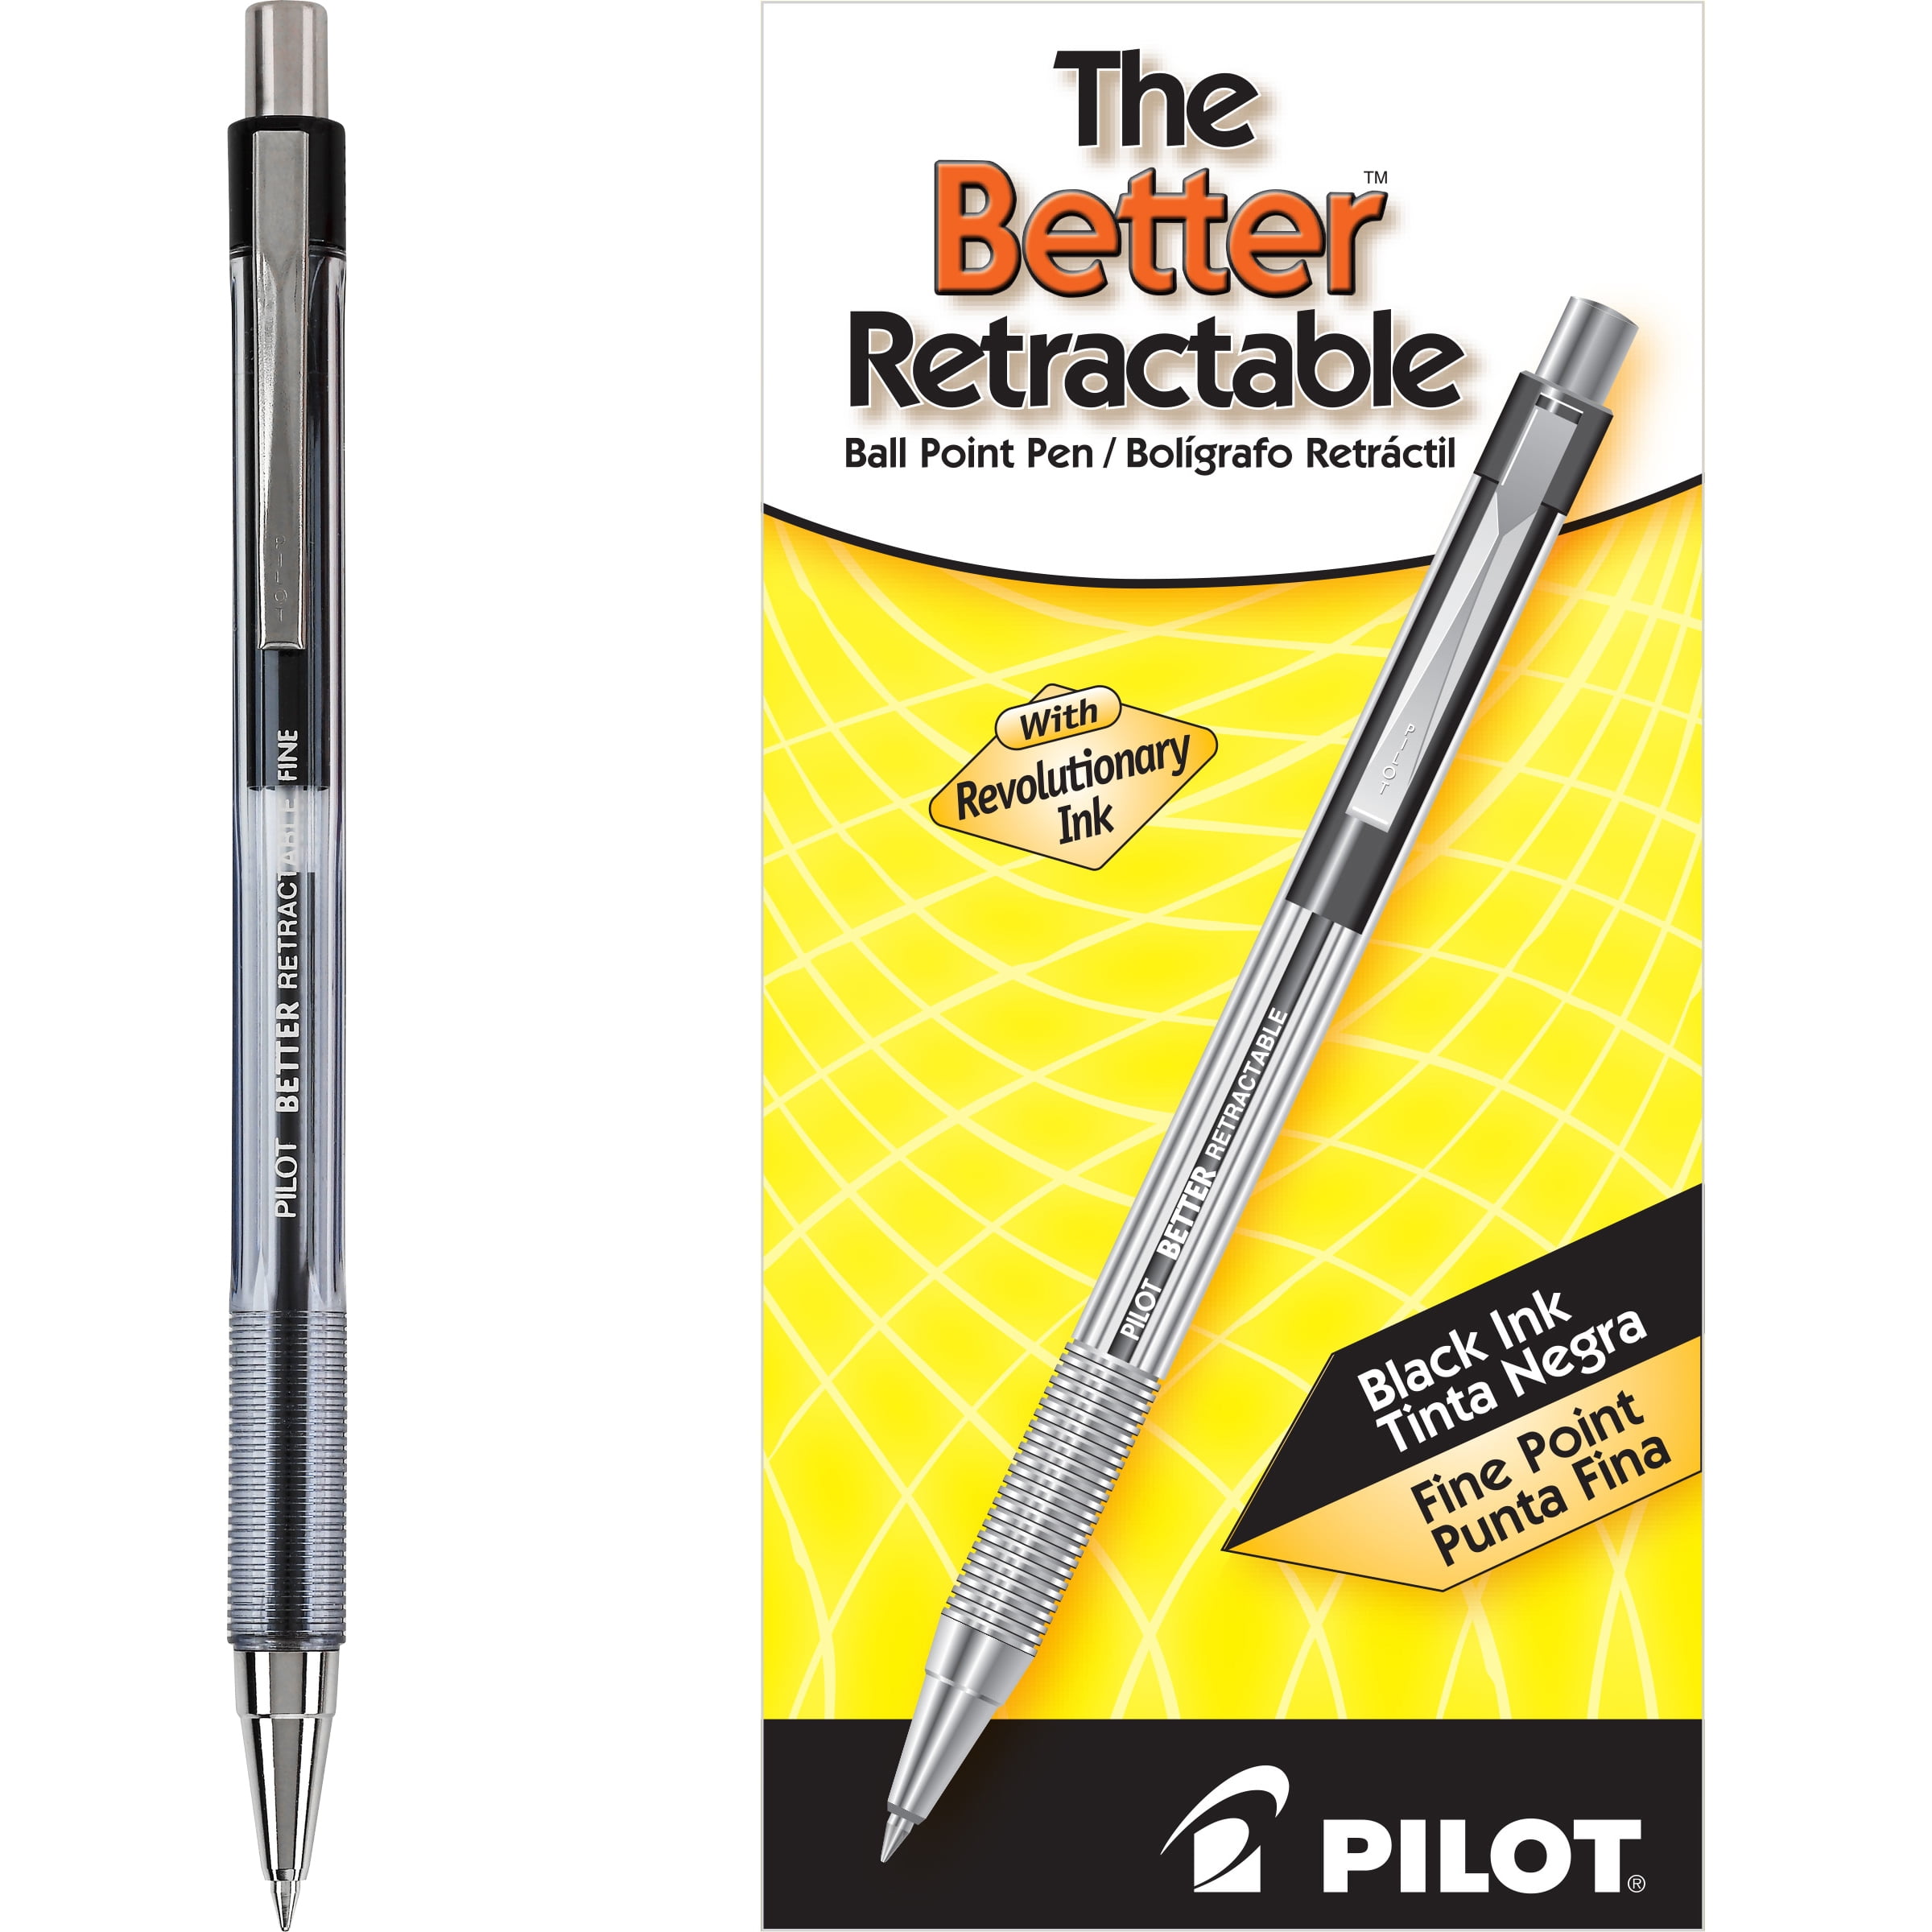 12 Count Black Ink PILOT The Better Ball Point Pen Refillable & Retractable Ballpoint Pens Fine Point 2 Pack 